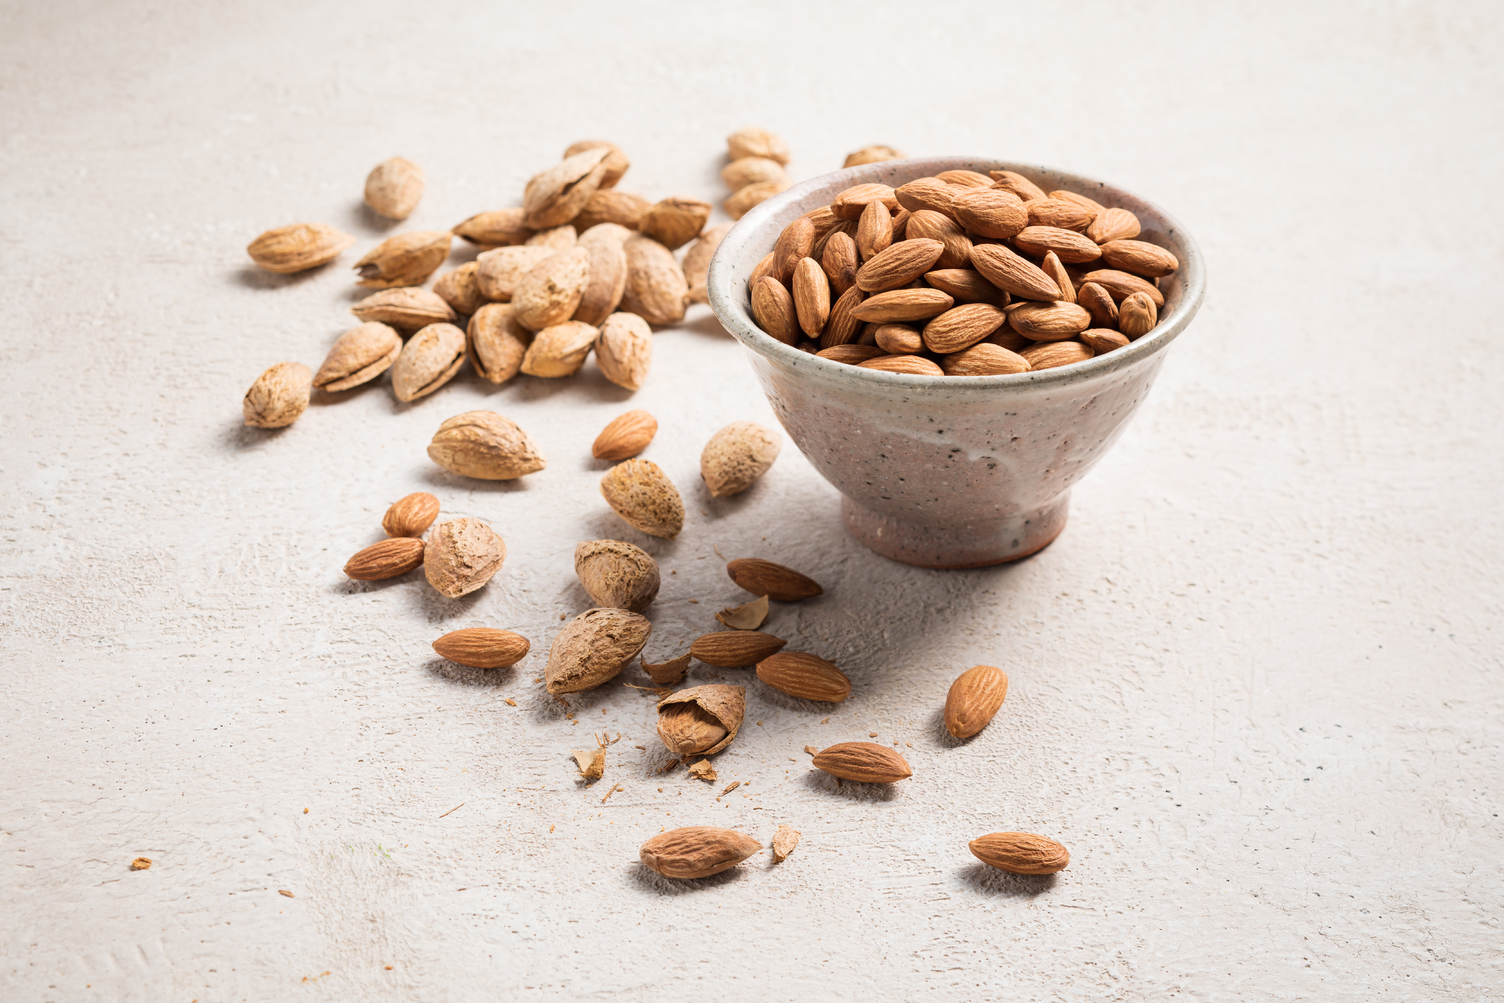 Add a Healthy Twist to Holi: Make Almonds Your Go-To Festive Snack